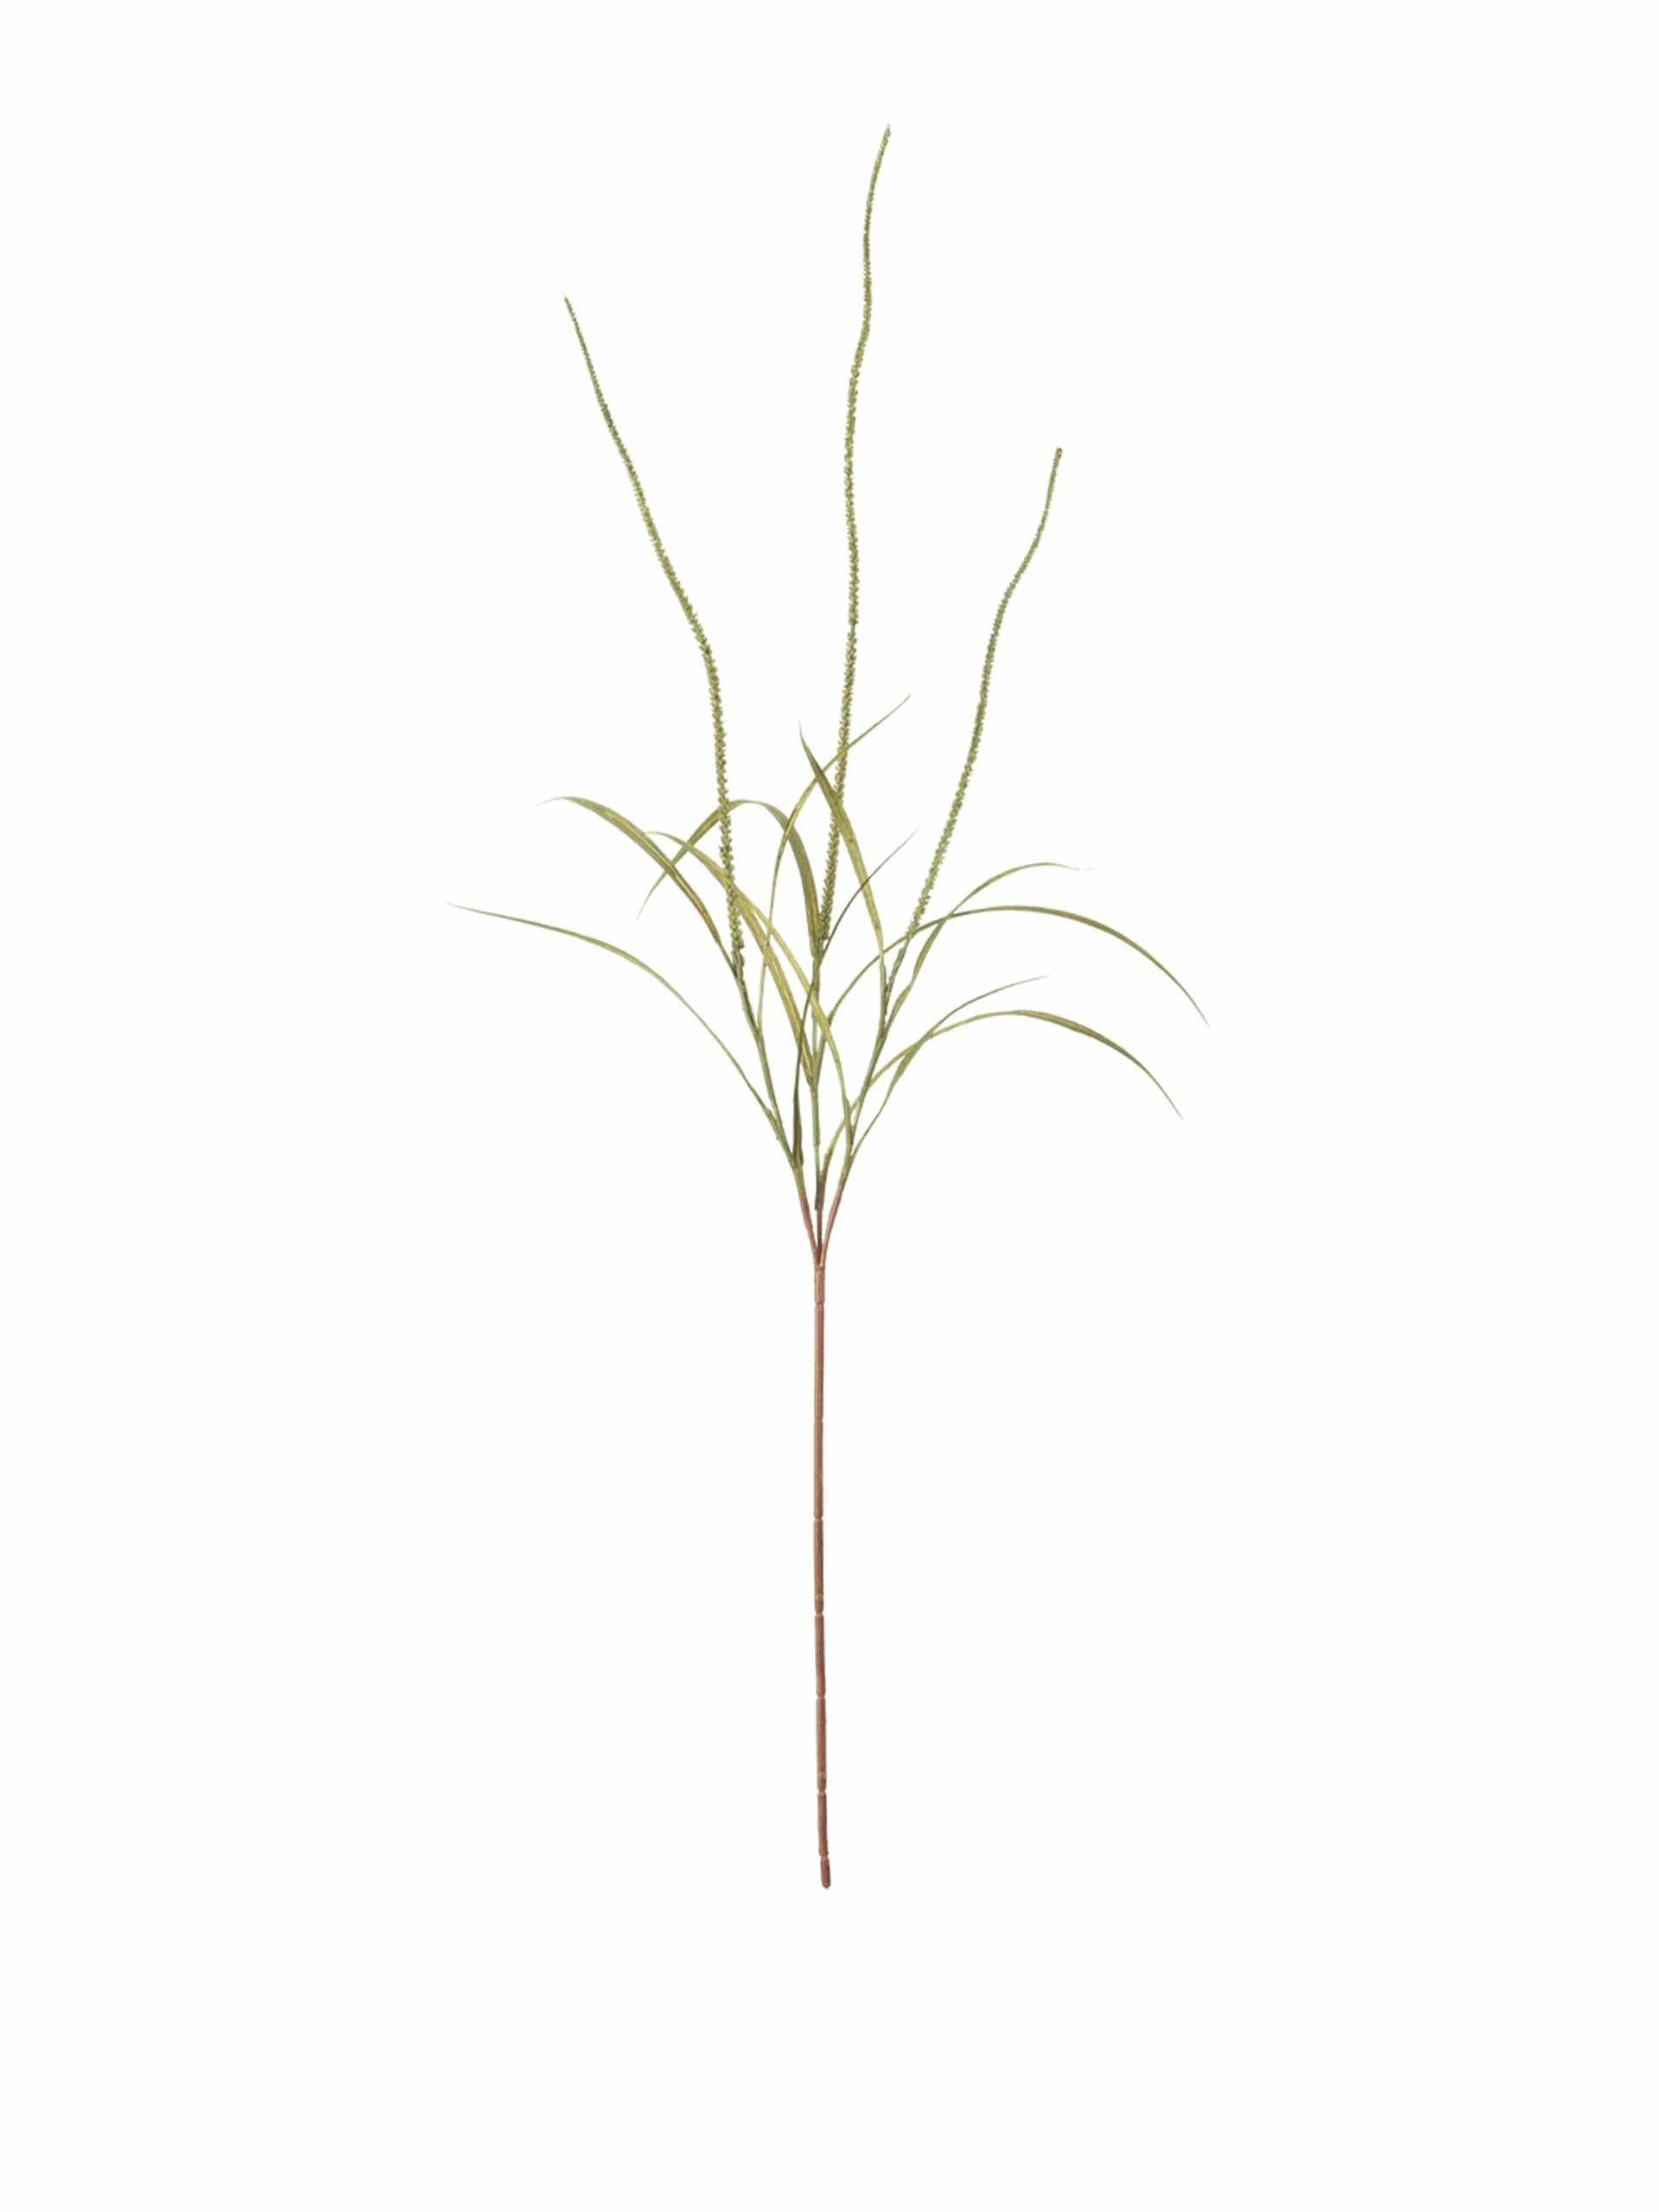 Sea Arrowgrass stem